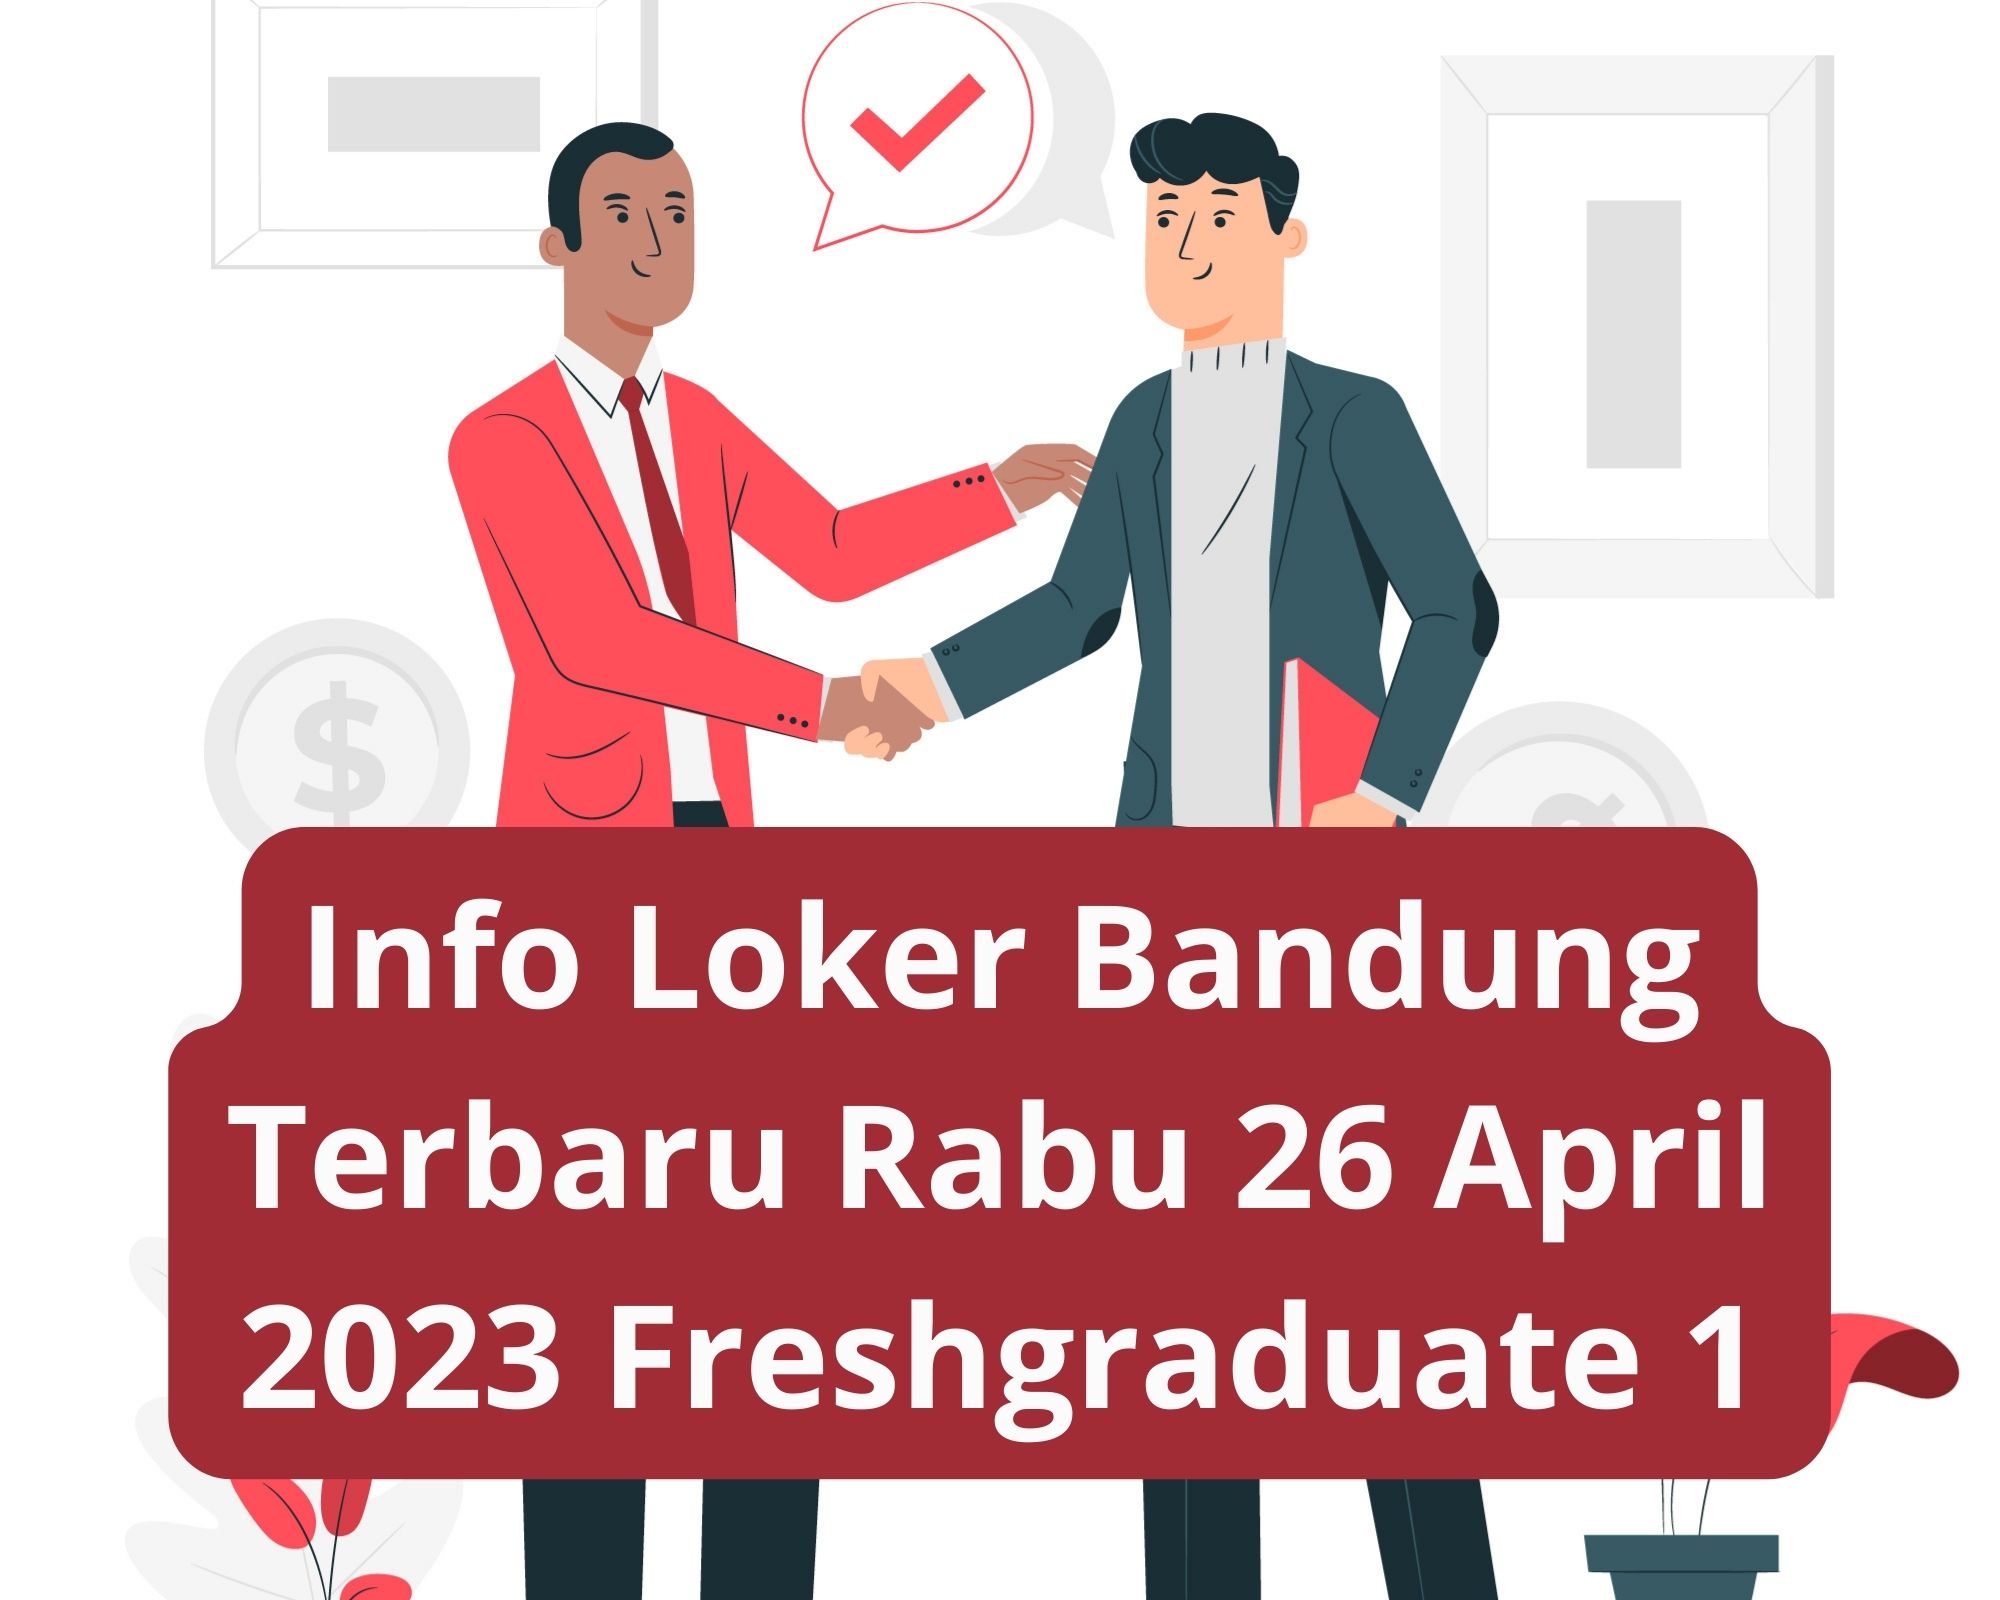 Info Loker Bandung Terbaru Rabu 26 April 2023 Freshgraduate 1